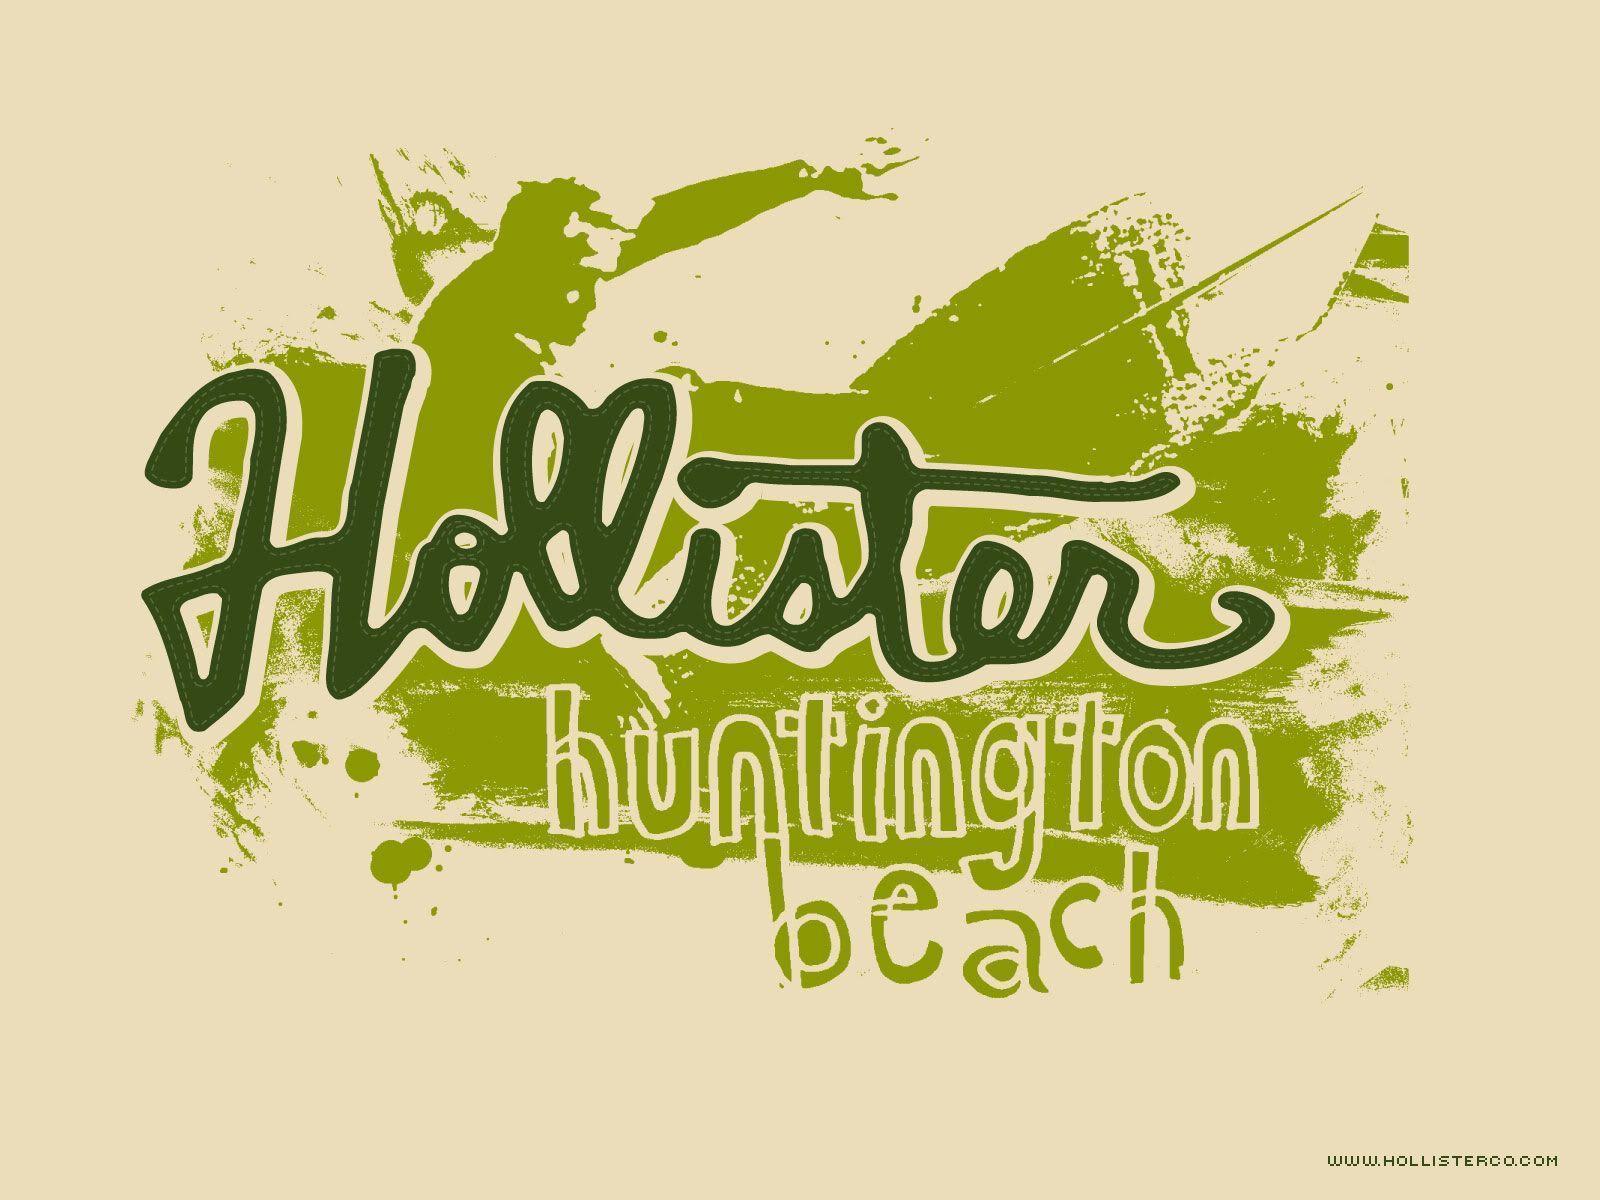 Hollister Wallpaper, 33 Desktop Image of Hollister. Hollister